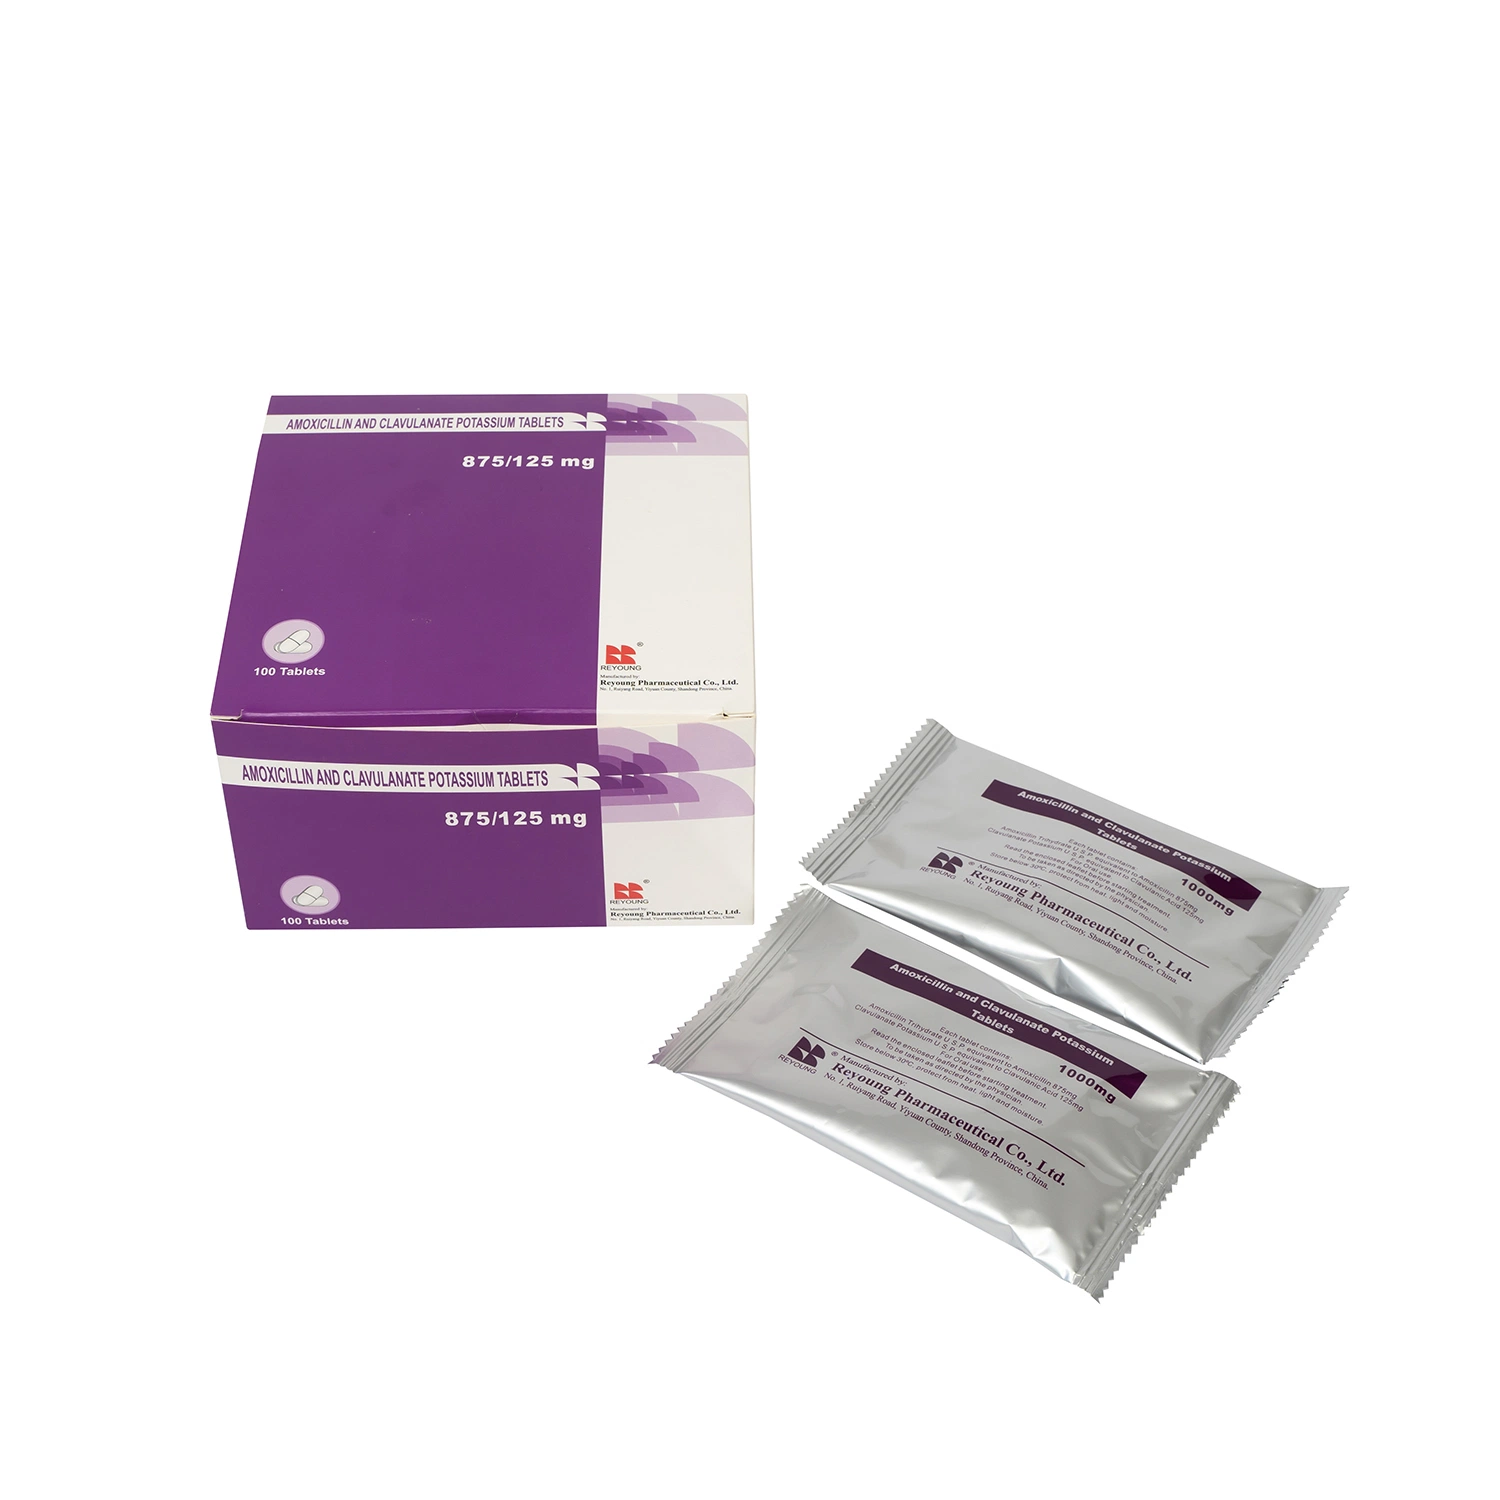 Amoxicillin Sodium Clavulanate Potassium Tablets